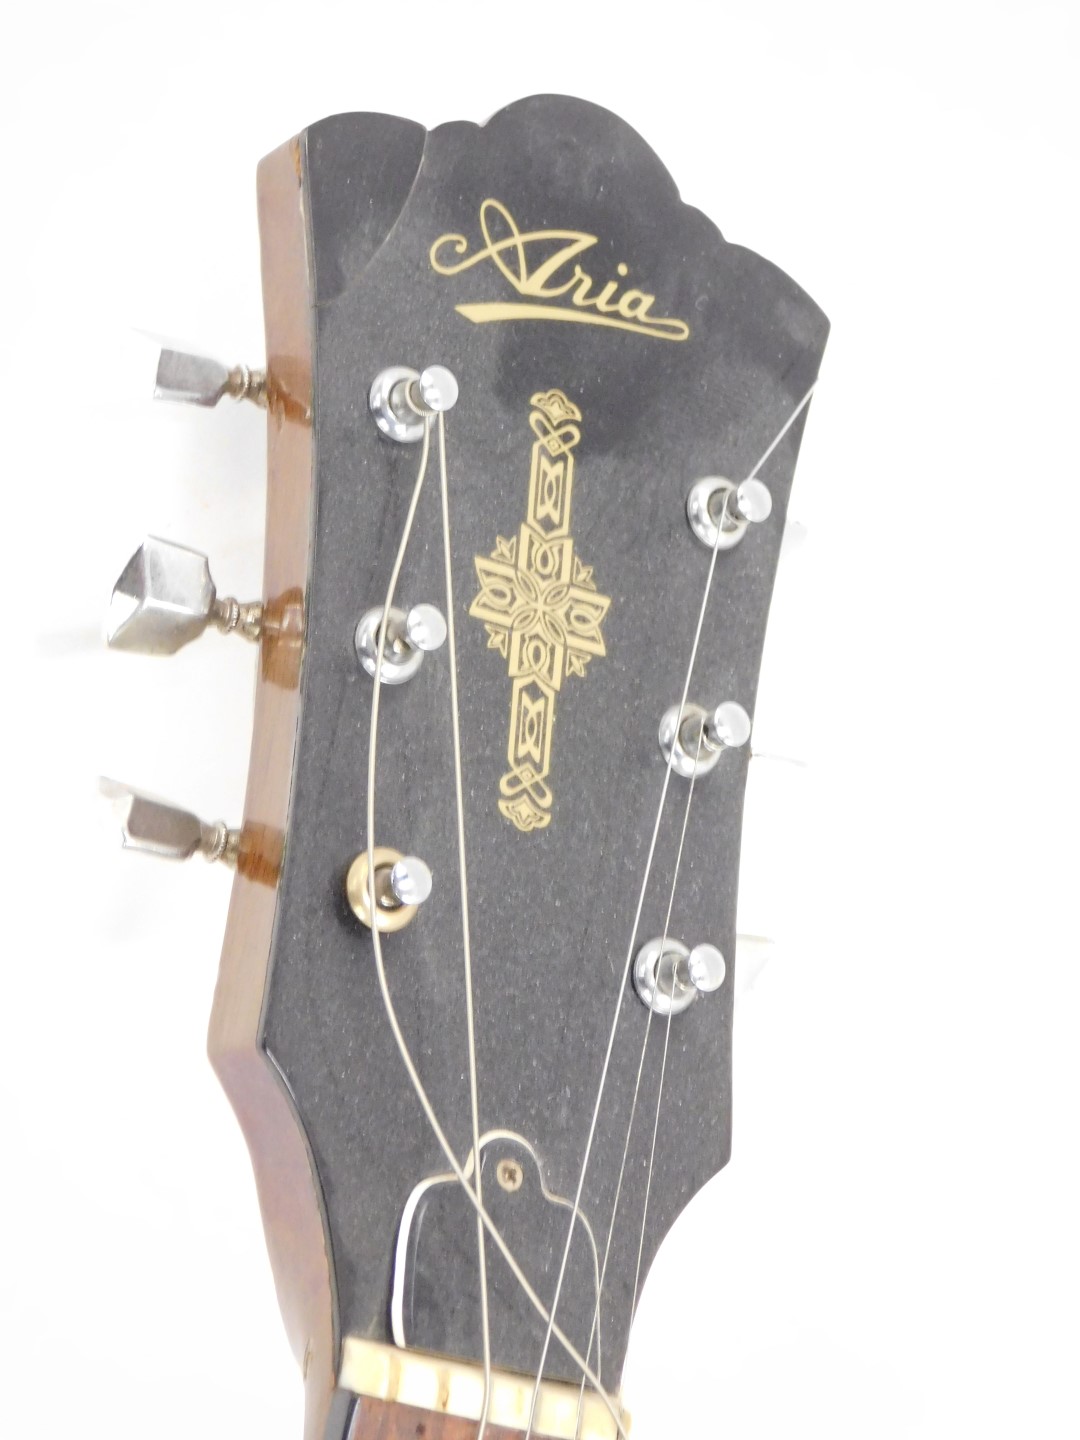 A John Pearse Aria Jumbo Model 3101 electro acoustic guitar. - Image 5 of 9